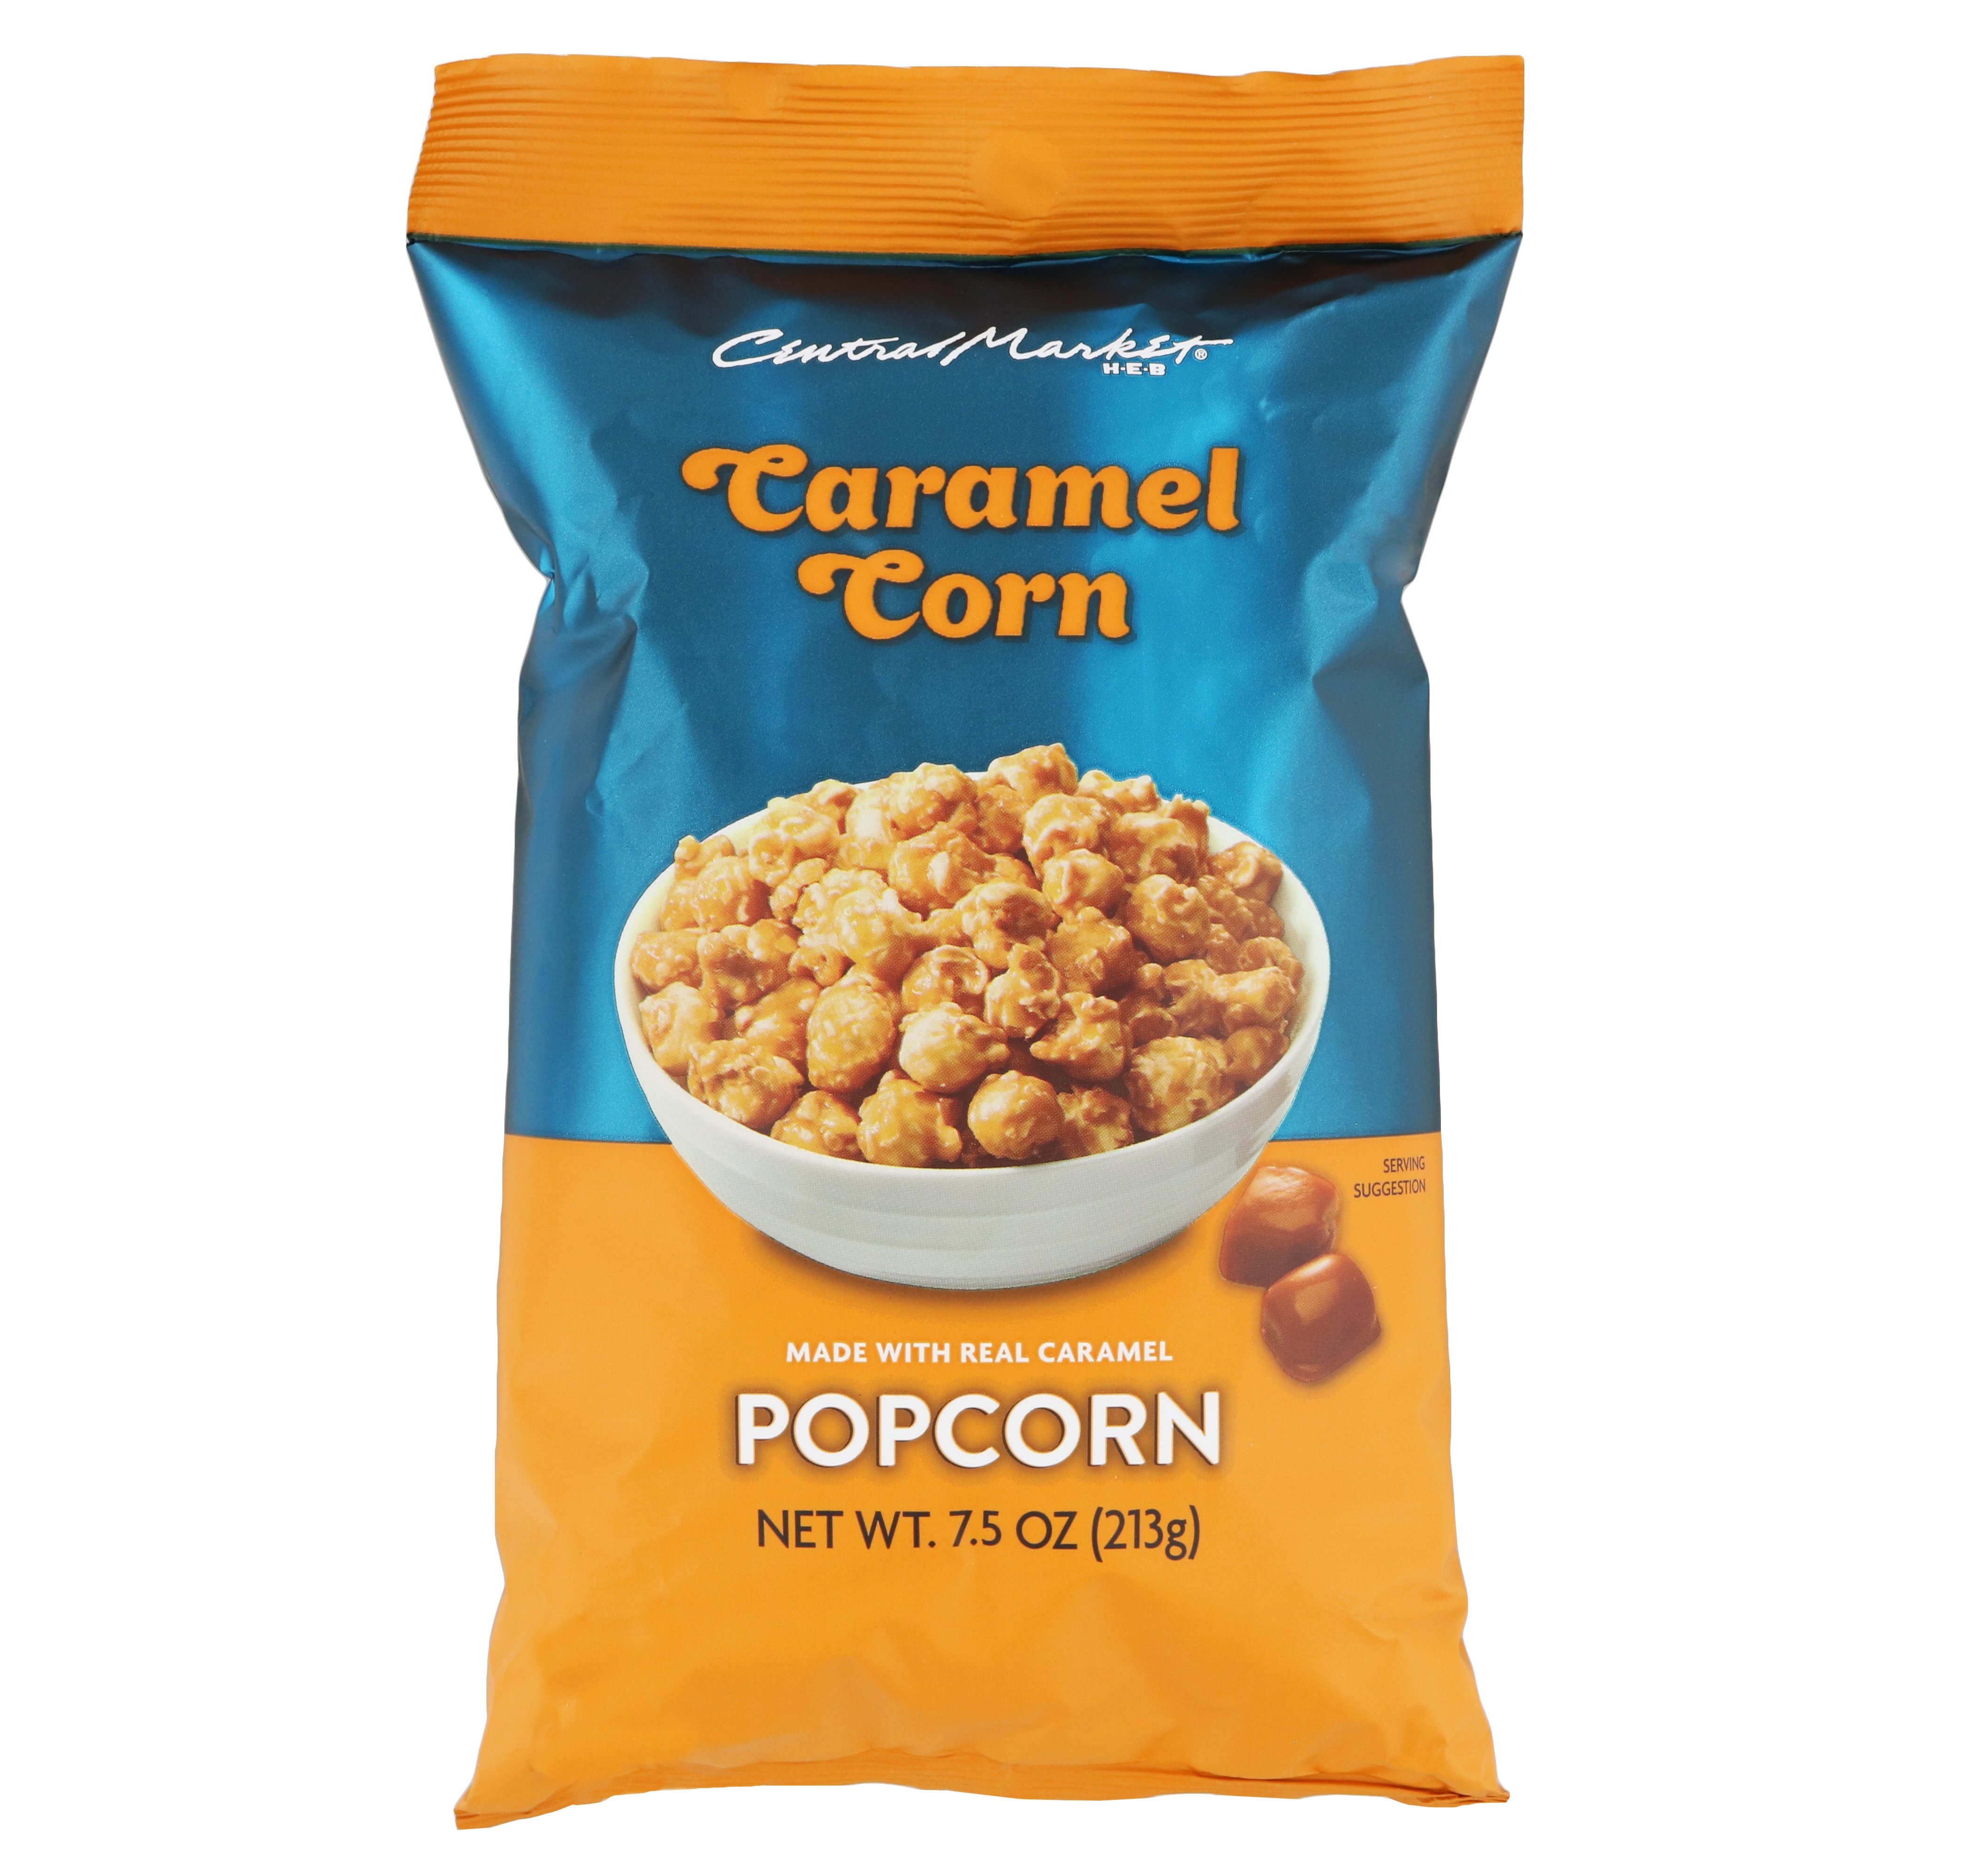 Werther's Original Classic Caramel Popcorn - Shop Popcorn at H-E-B